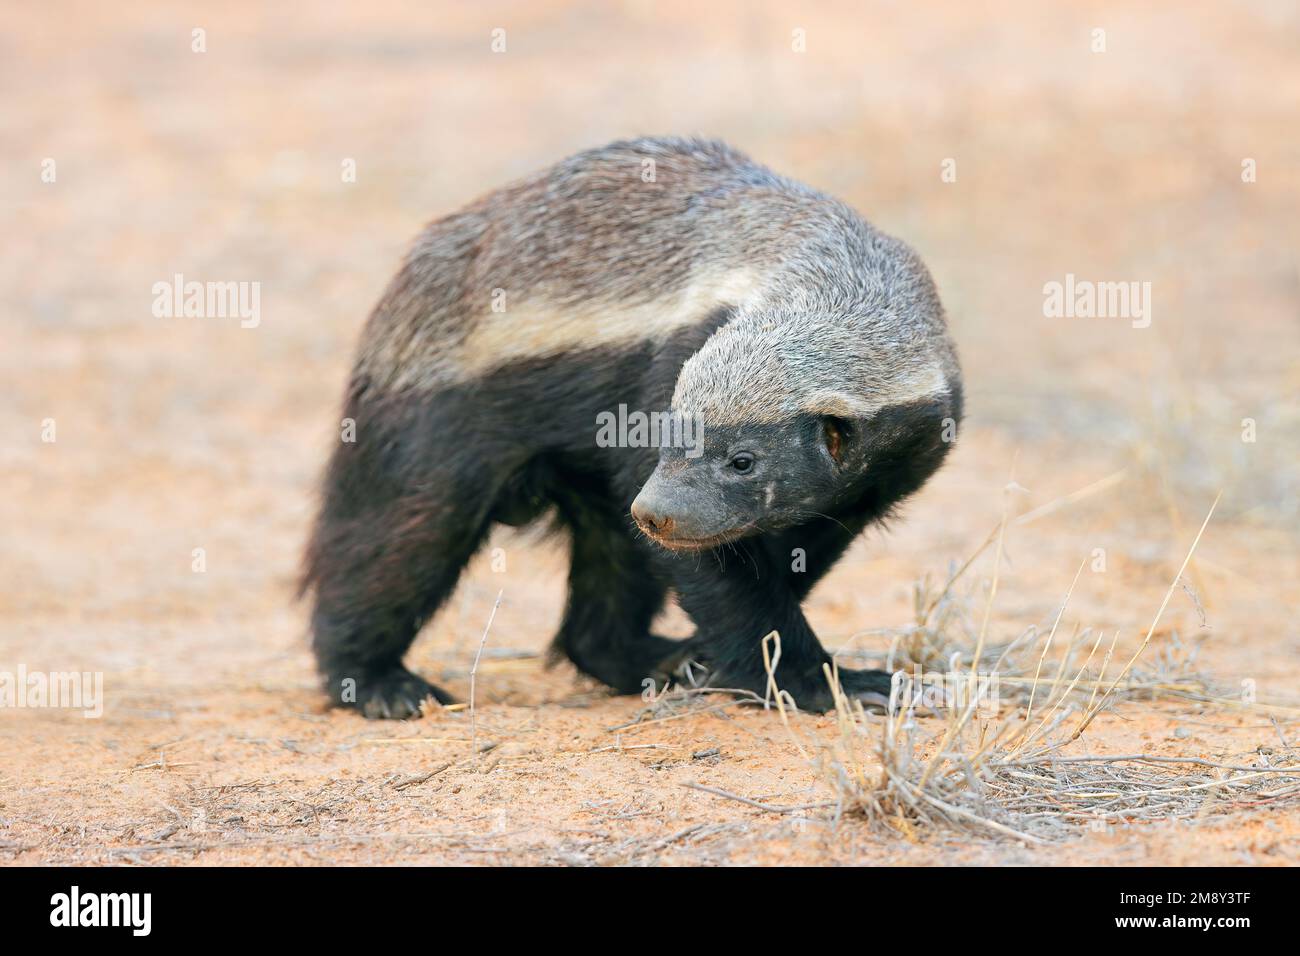 An alert honey badger (Mellivora capensis), Kalahari desert, South Africa Stock Photo